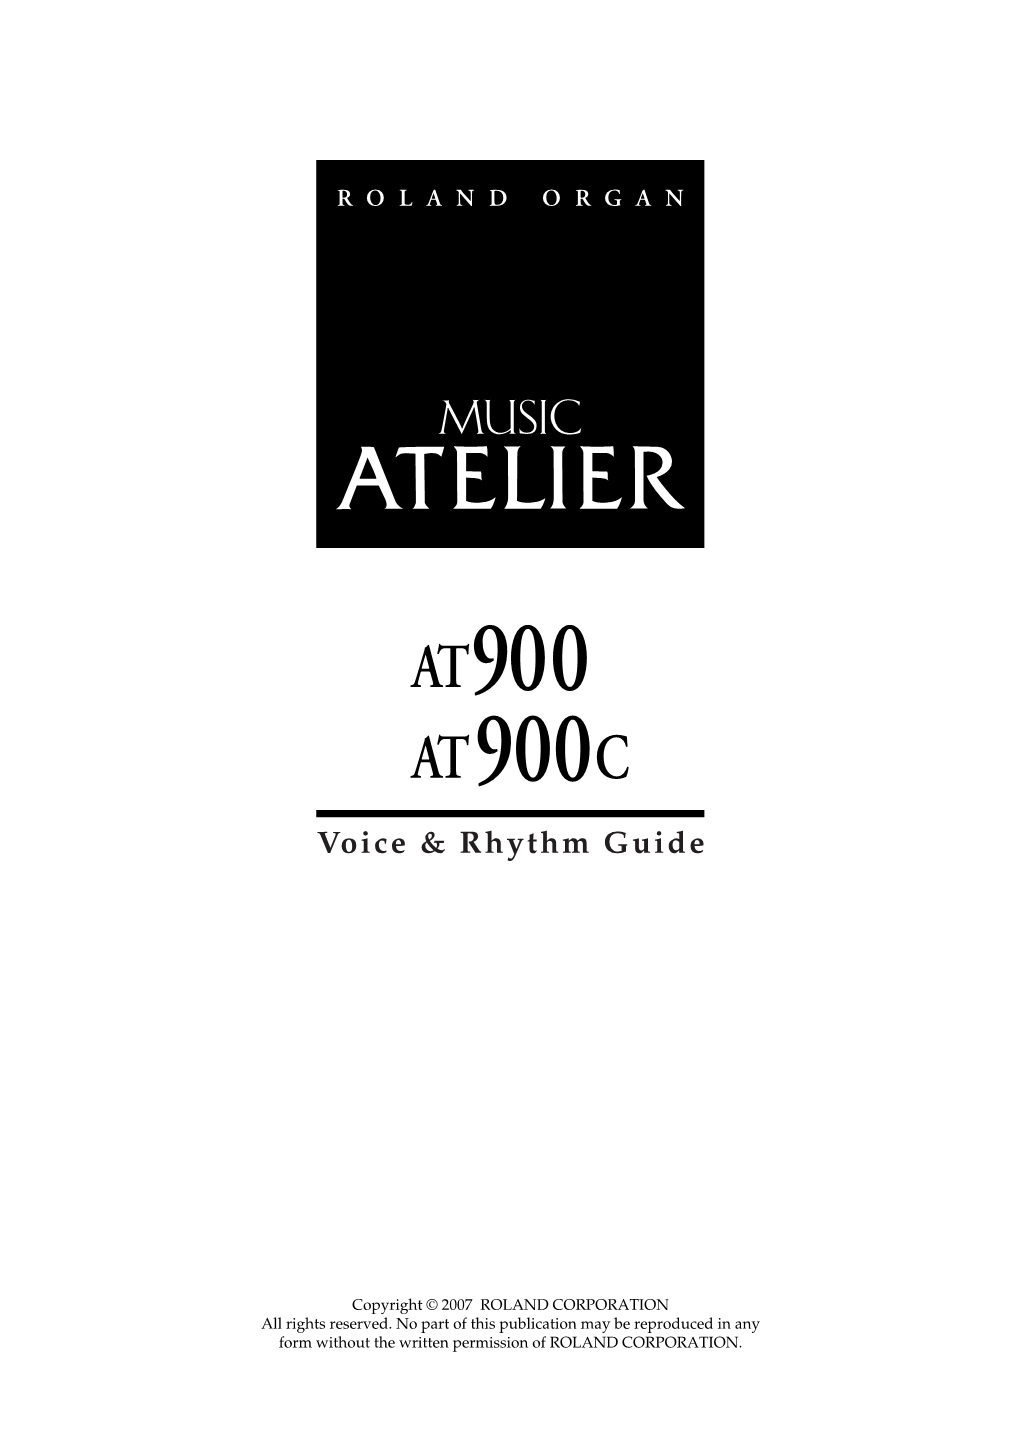 Voice & Rhythm Guide